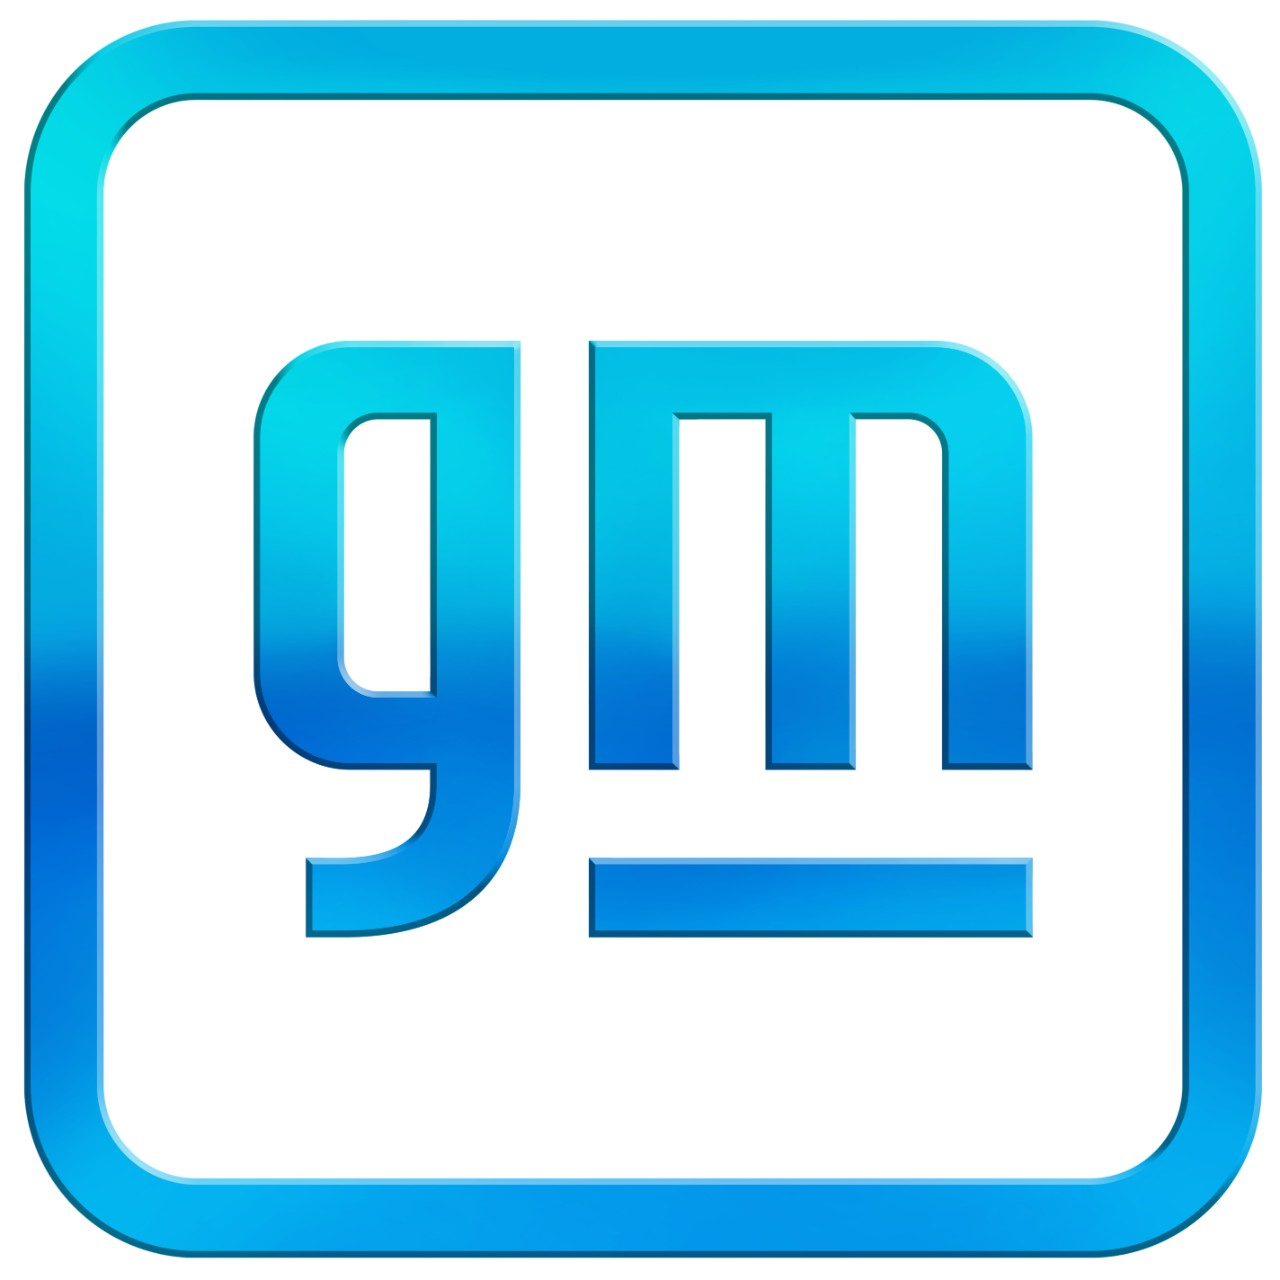 General Motors - Austin IT Innovation Center Company Logo